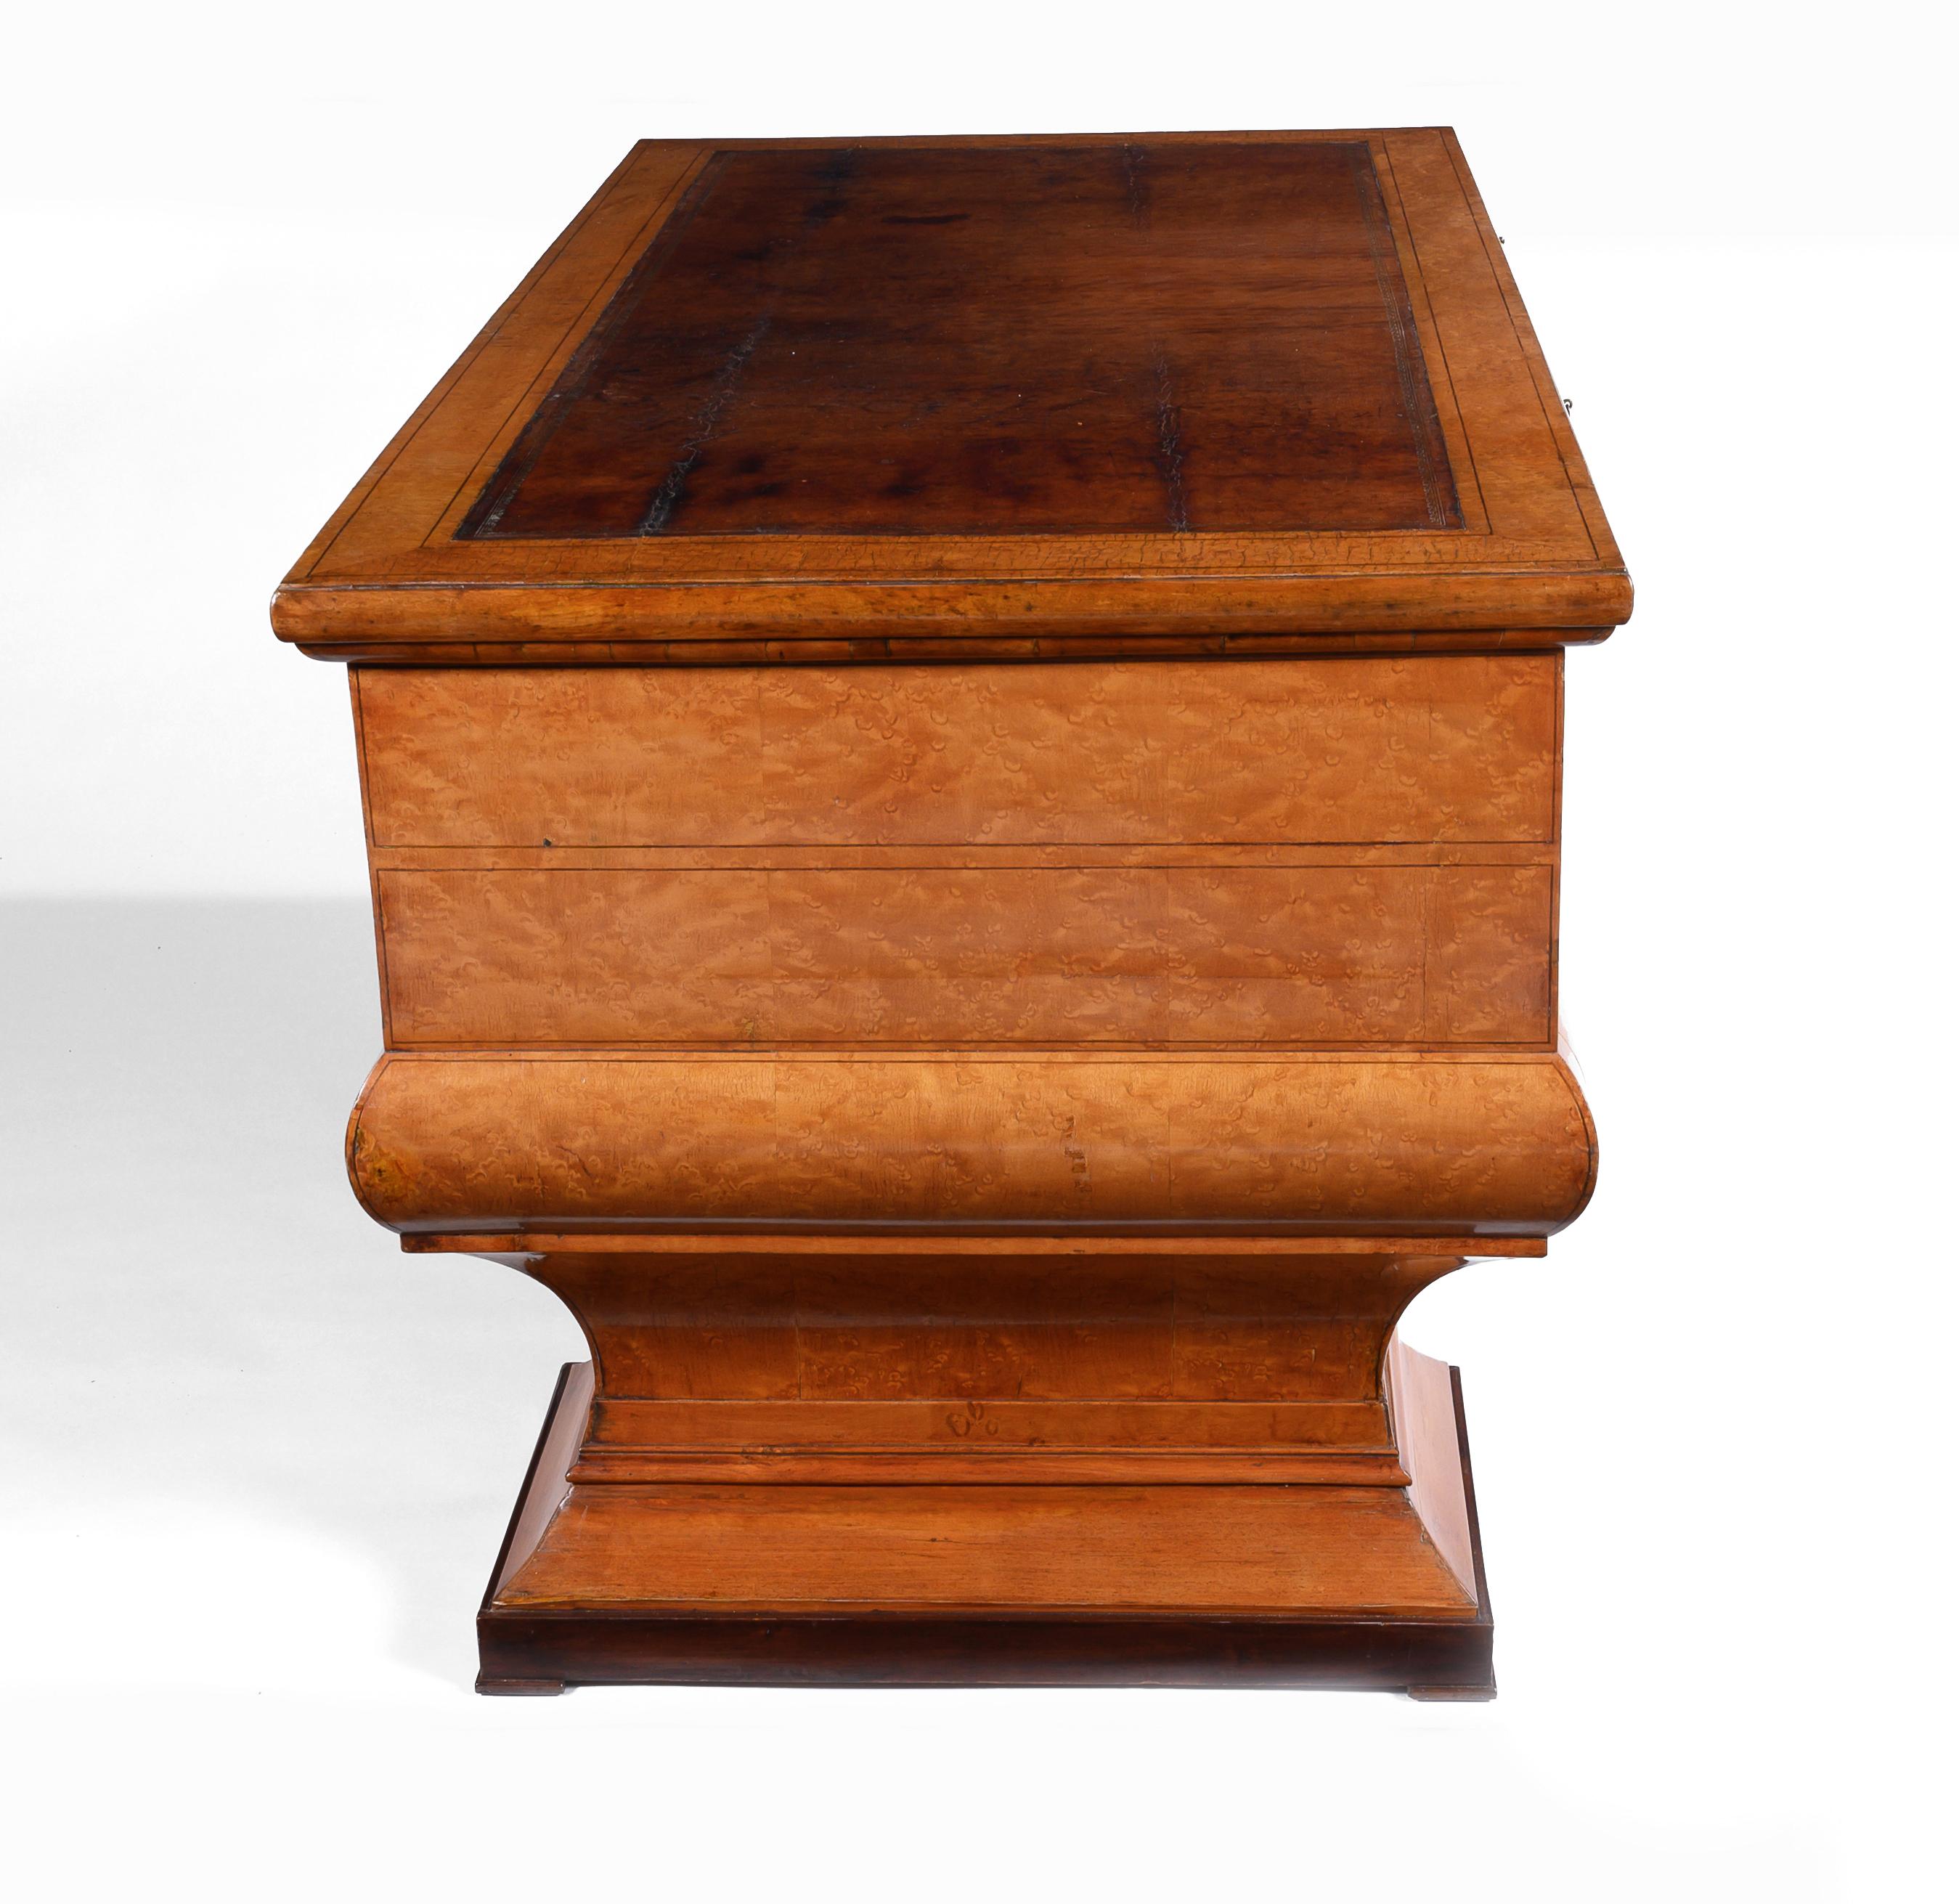 Rare Biedermeier Maple Wood Desk of Unusual Neoclassical Form, Vienna 1